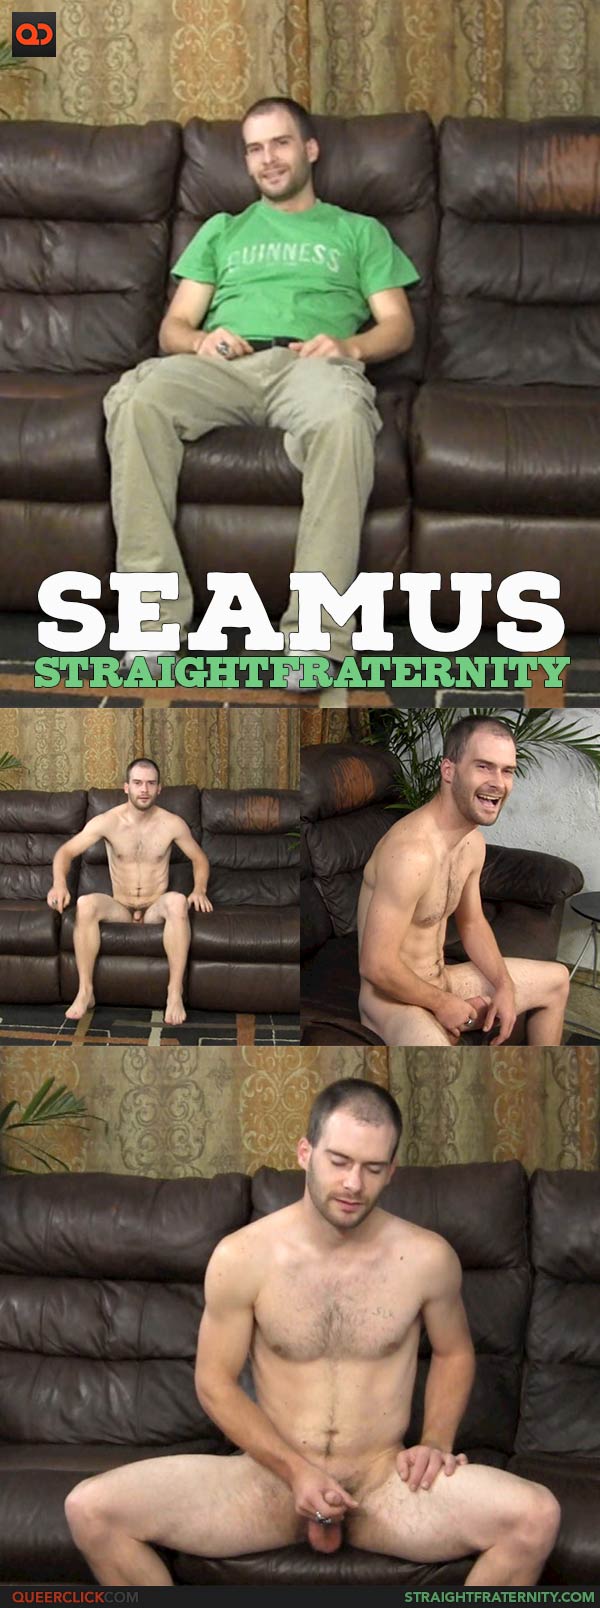 Straight Fraternity: Seamus